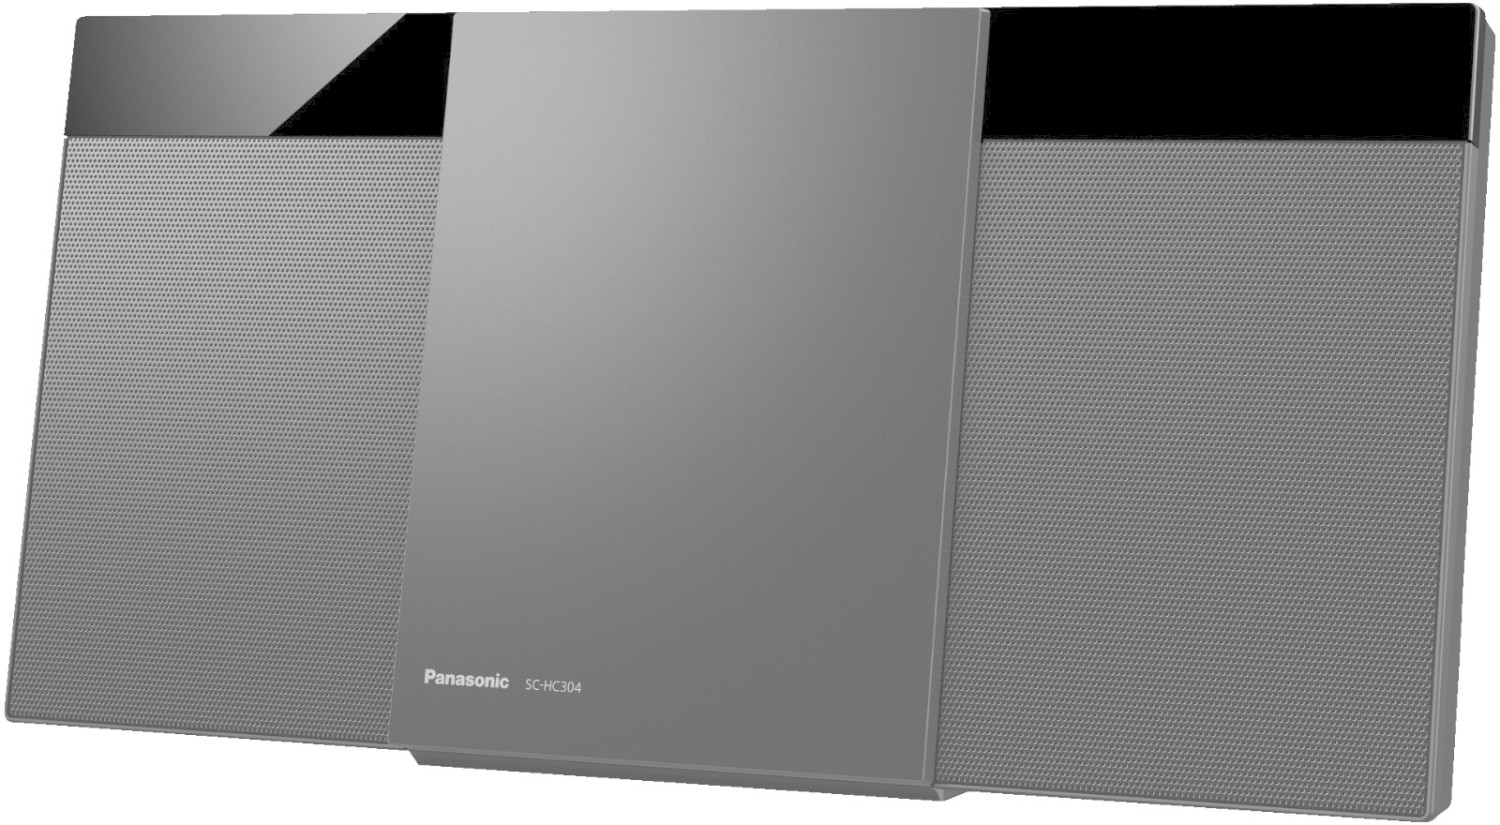 Panasonic SC-HC304 schwarz ab 166,90 € | Preisvergleich bei